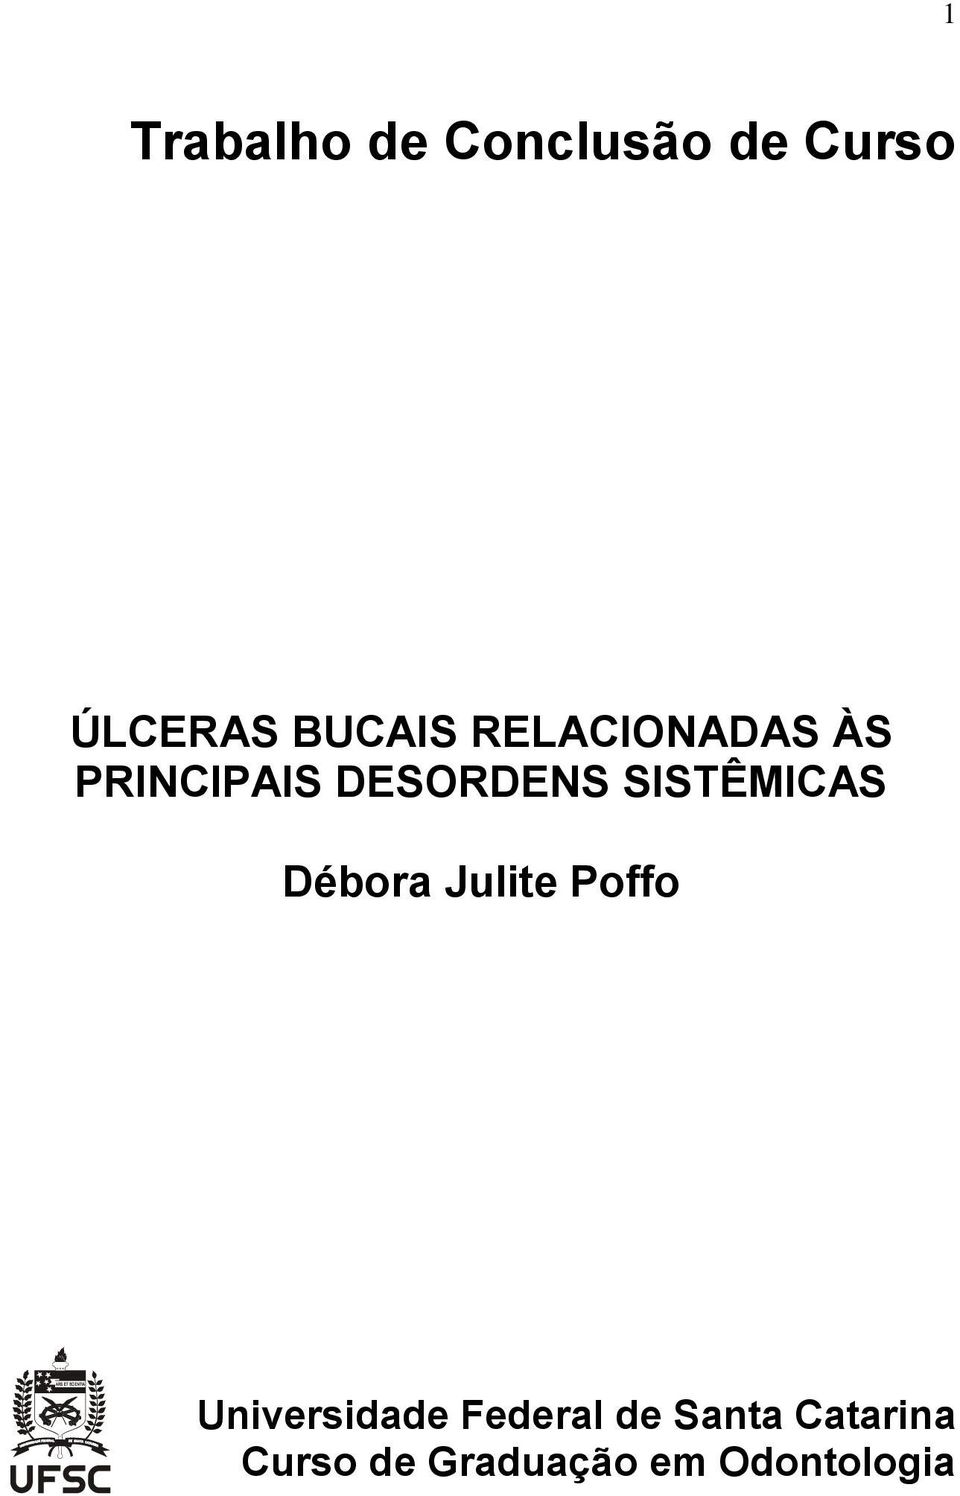 SISTÊMICAS Débora Julite Poffo Universidade